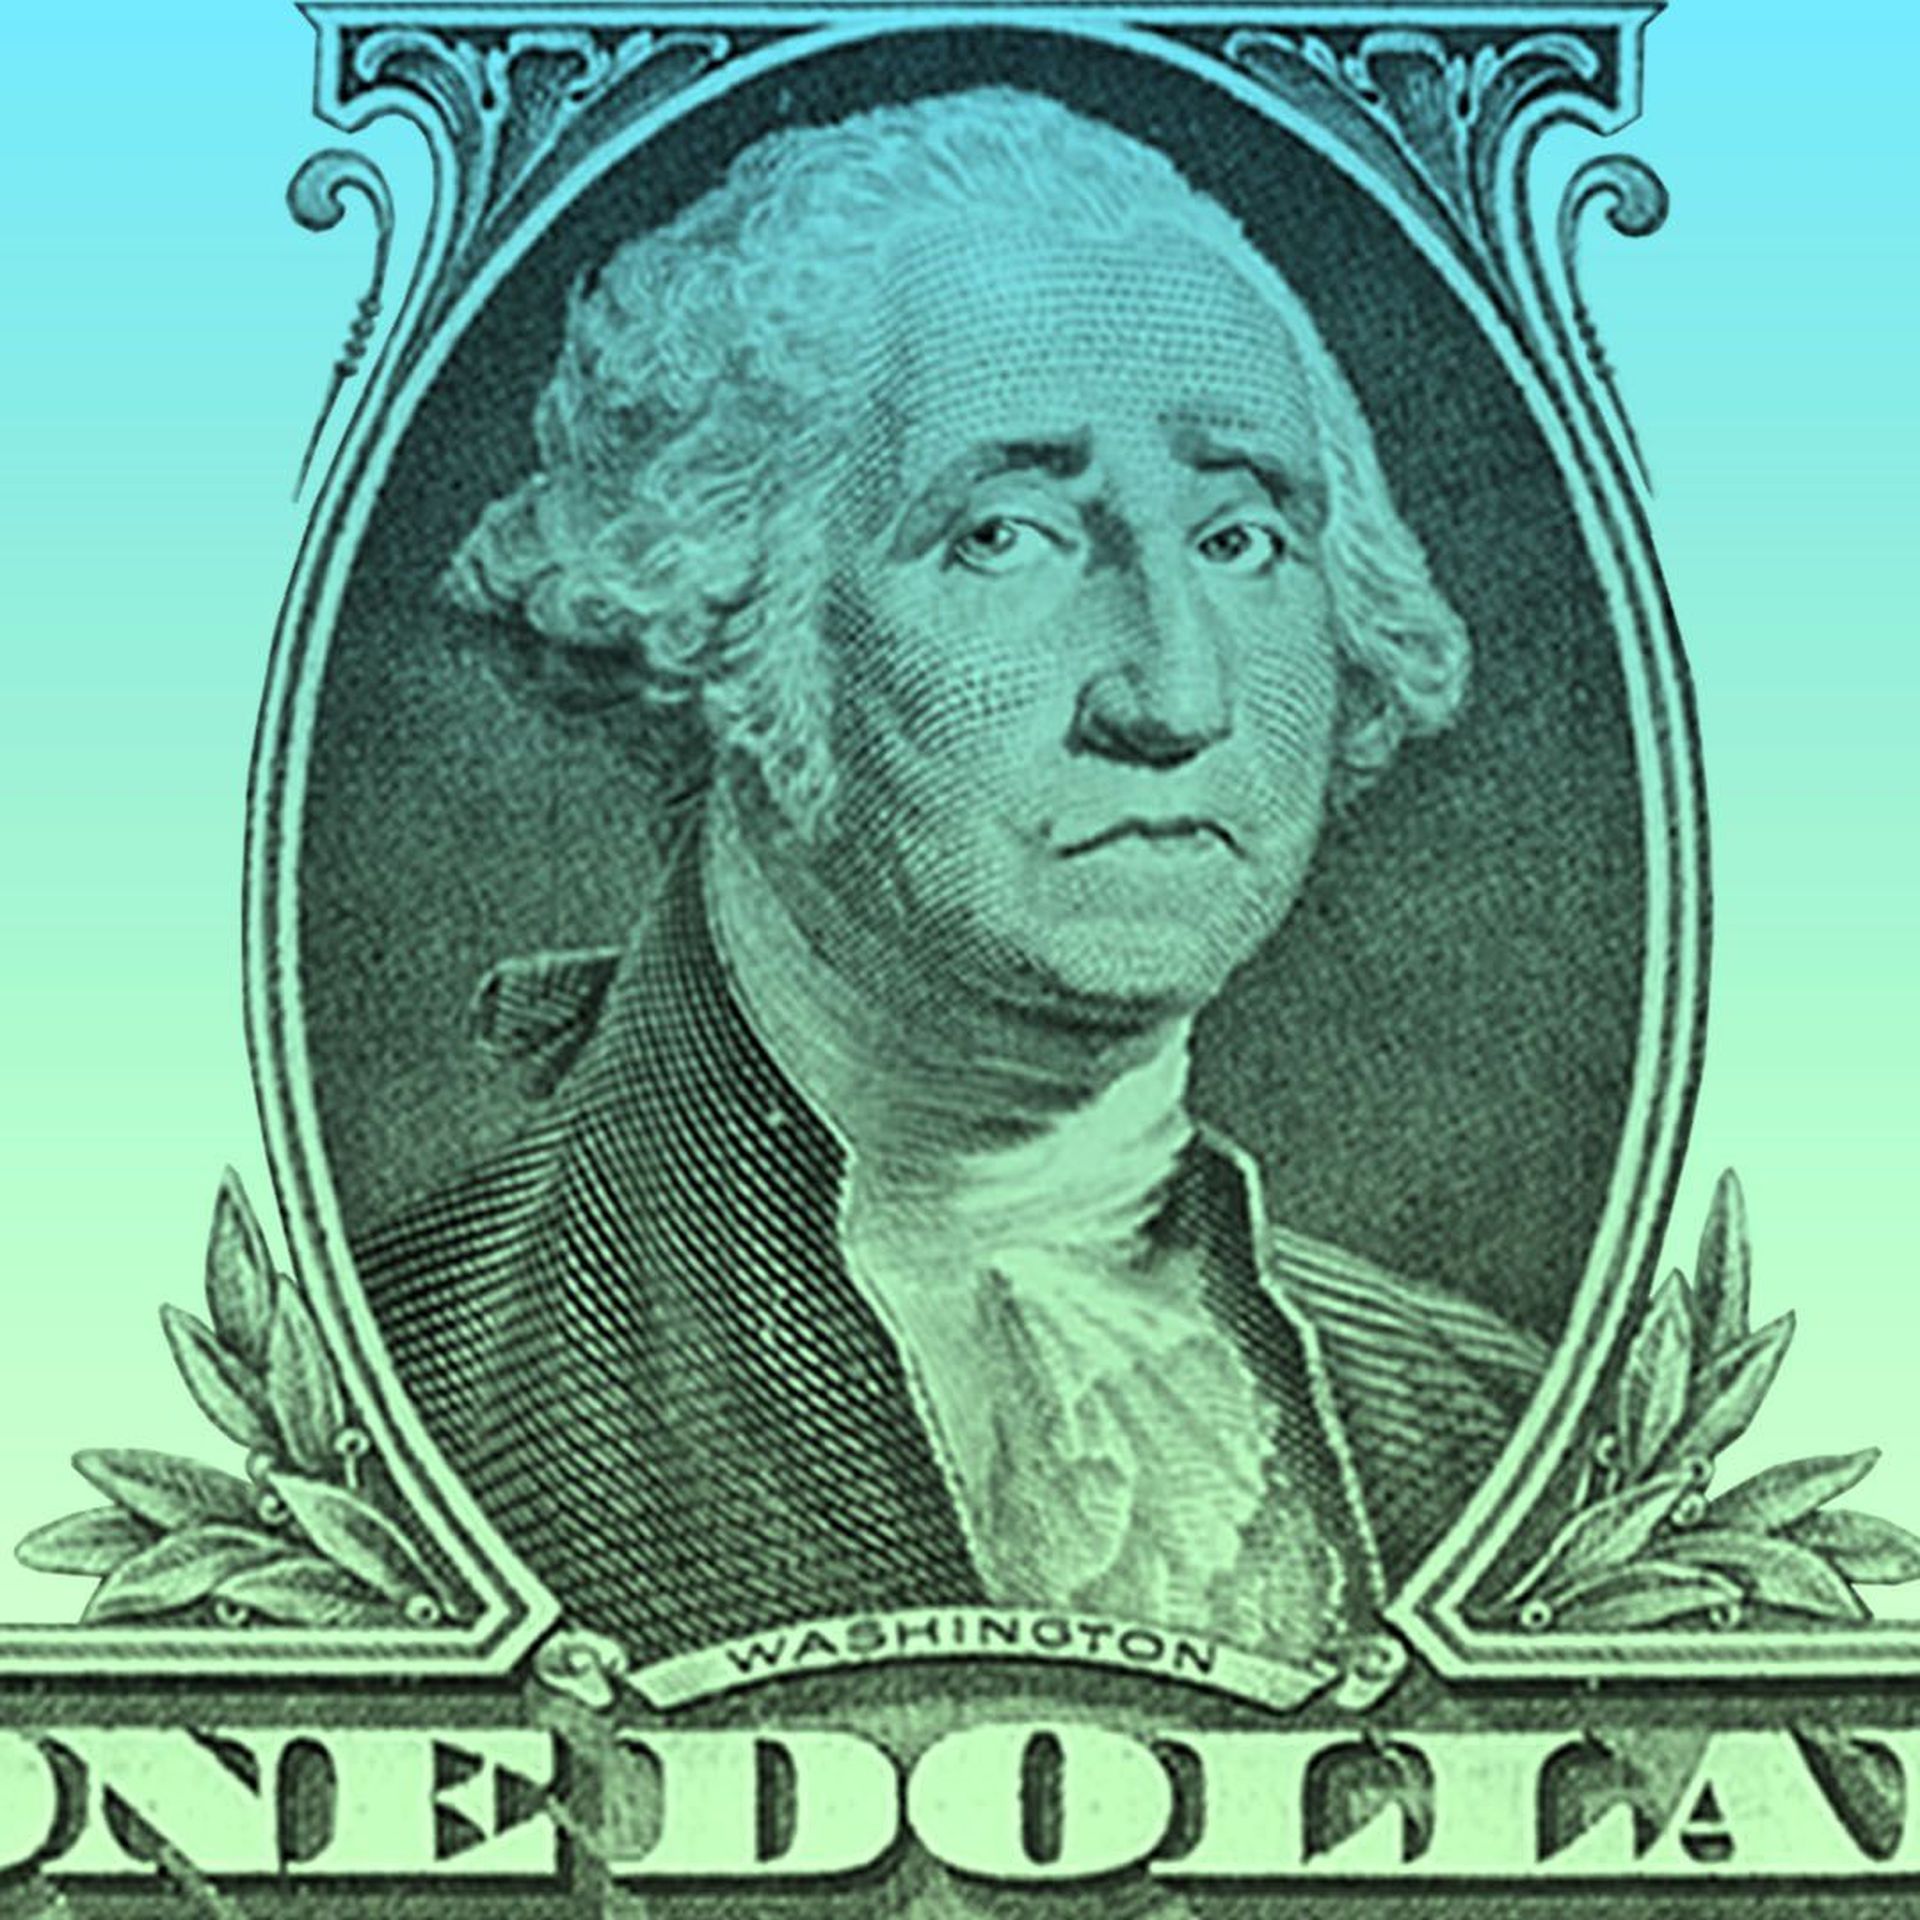 Illustration of a despondent George Washington on the dollar bill